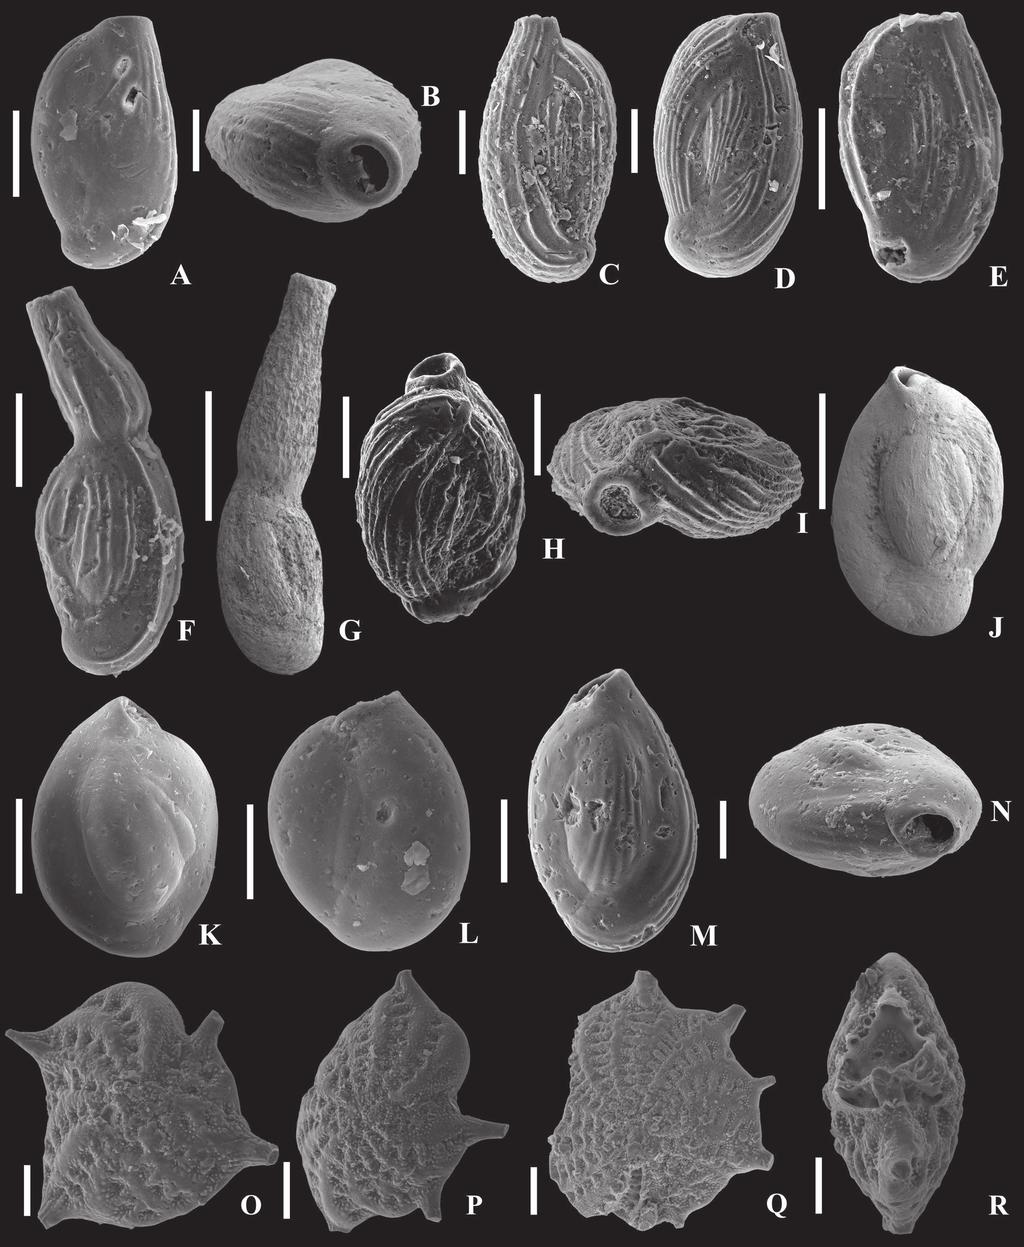 432 DUMITRIU, LOGHIN, DUBICKA, MELINTE-DOBRINESCU, PARUCH-KULCZYCKA and IONESI Fig 11 SEM photographs of the representative foraminifera species identified in the analysed samples A, B Cycloforina